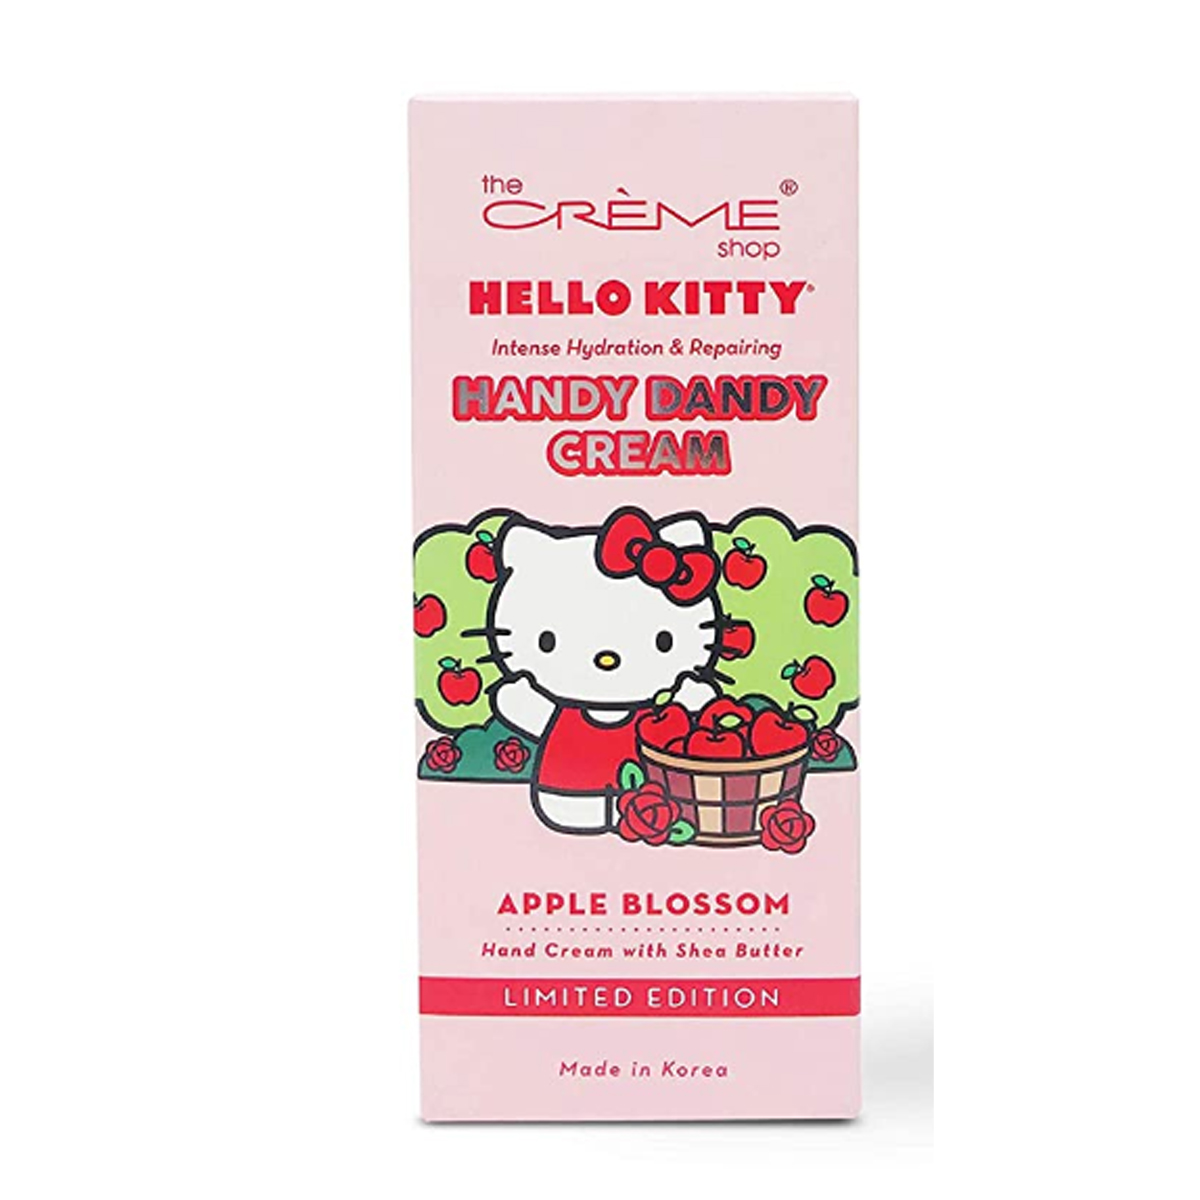 Handy Dandy Cream Hello Kitty - Apple Blossom